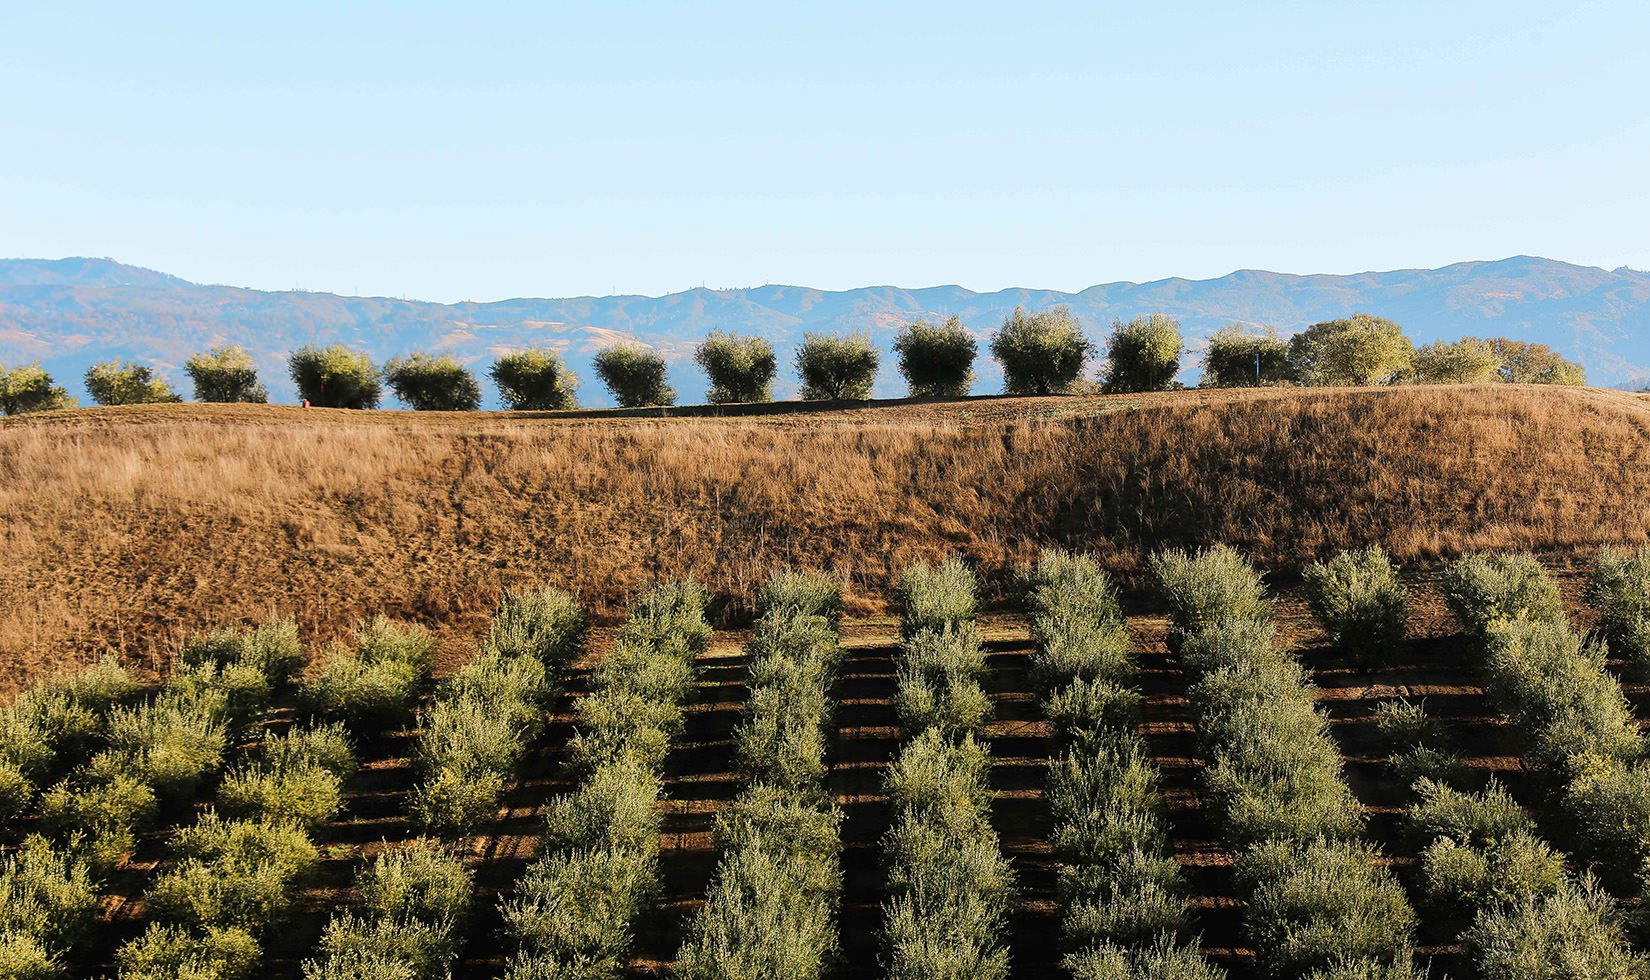 Jordan Winery Olive Oil Harvest 2015-1528